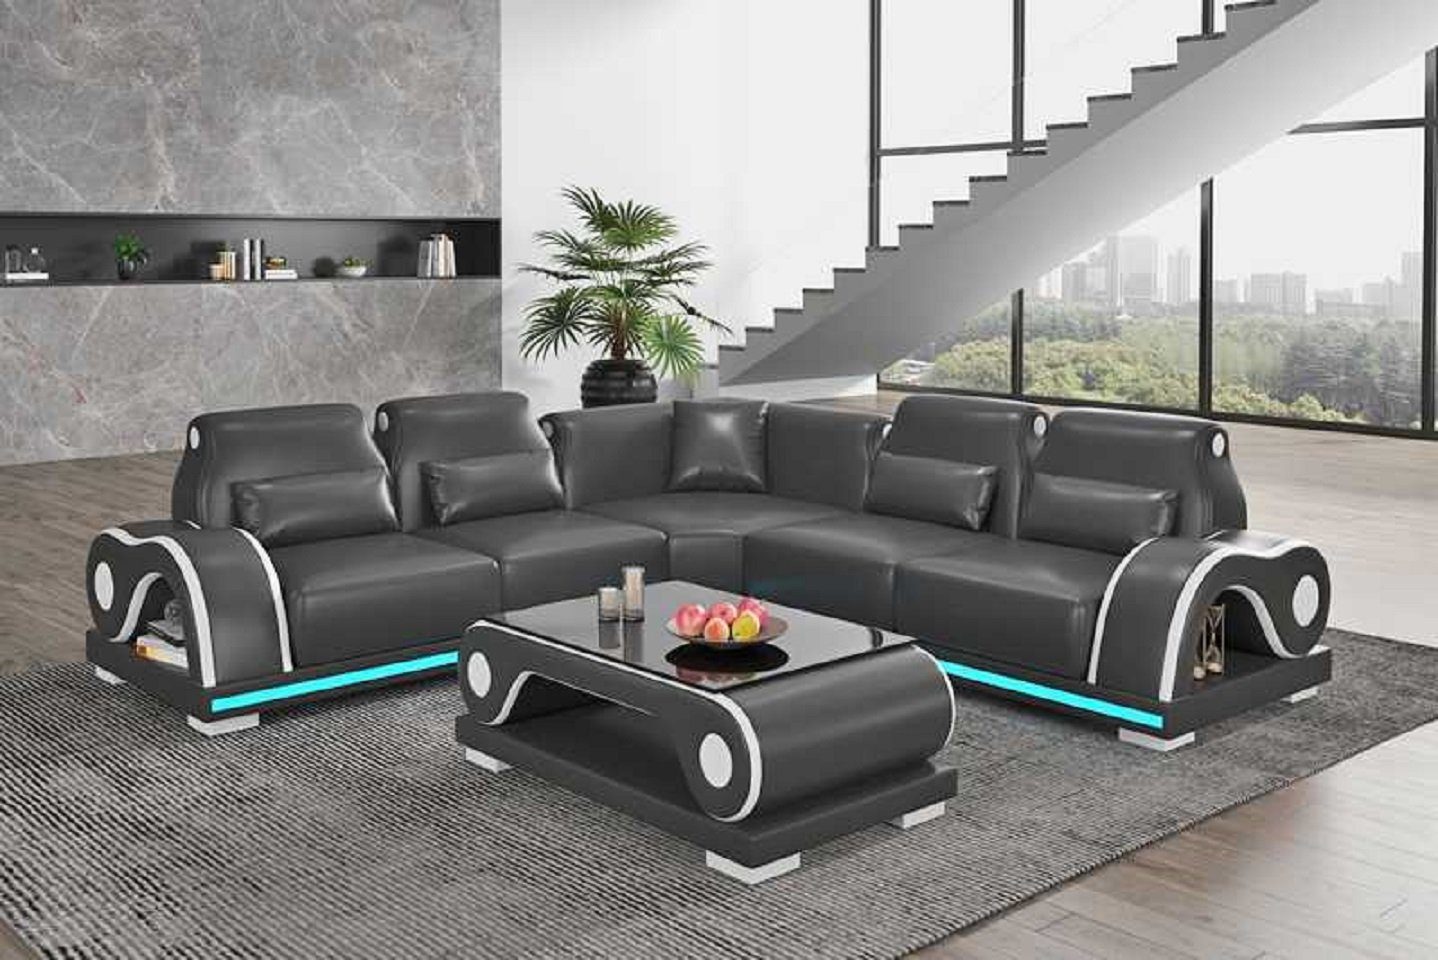 L JVmoebel 3 Luxus Teile, Form in Europe Eckgarnitur Moderne Couchen, Couch Made Sofa Schwarz Ecksofa Ecksofa